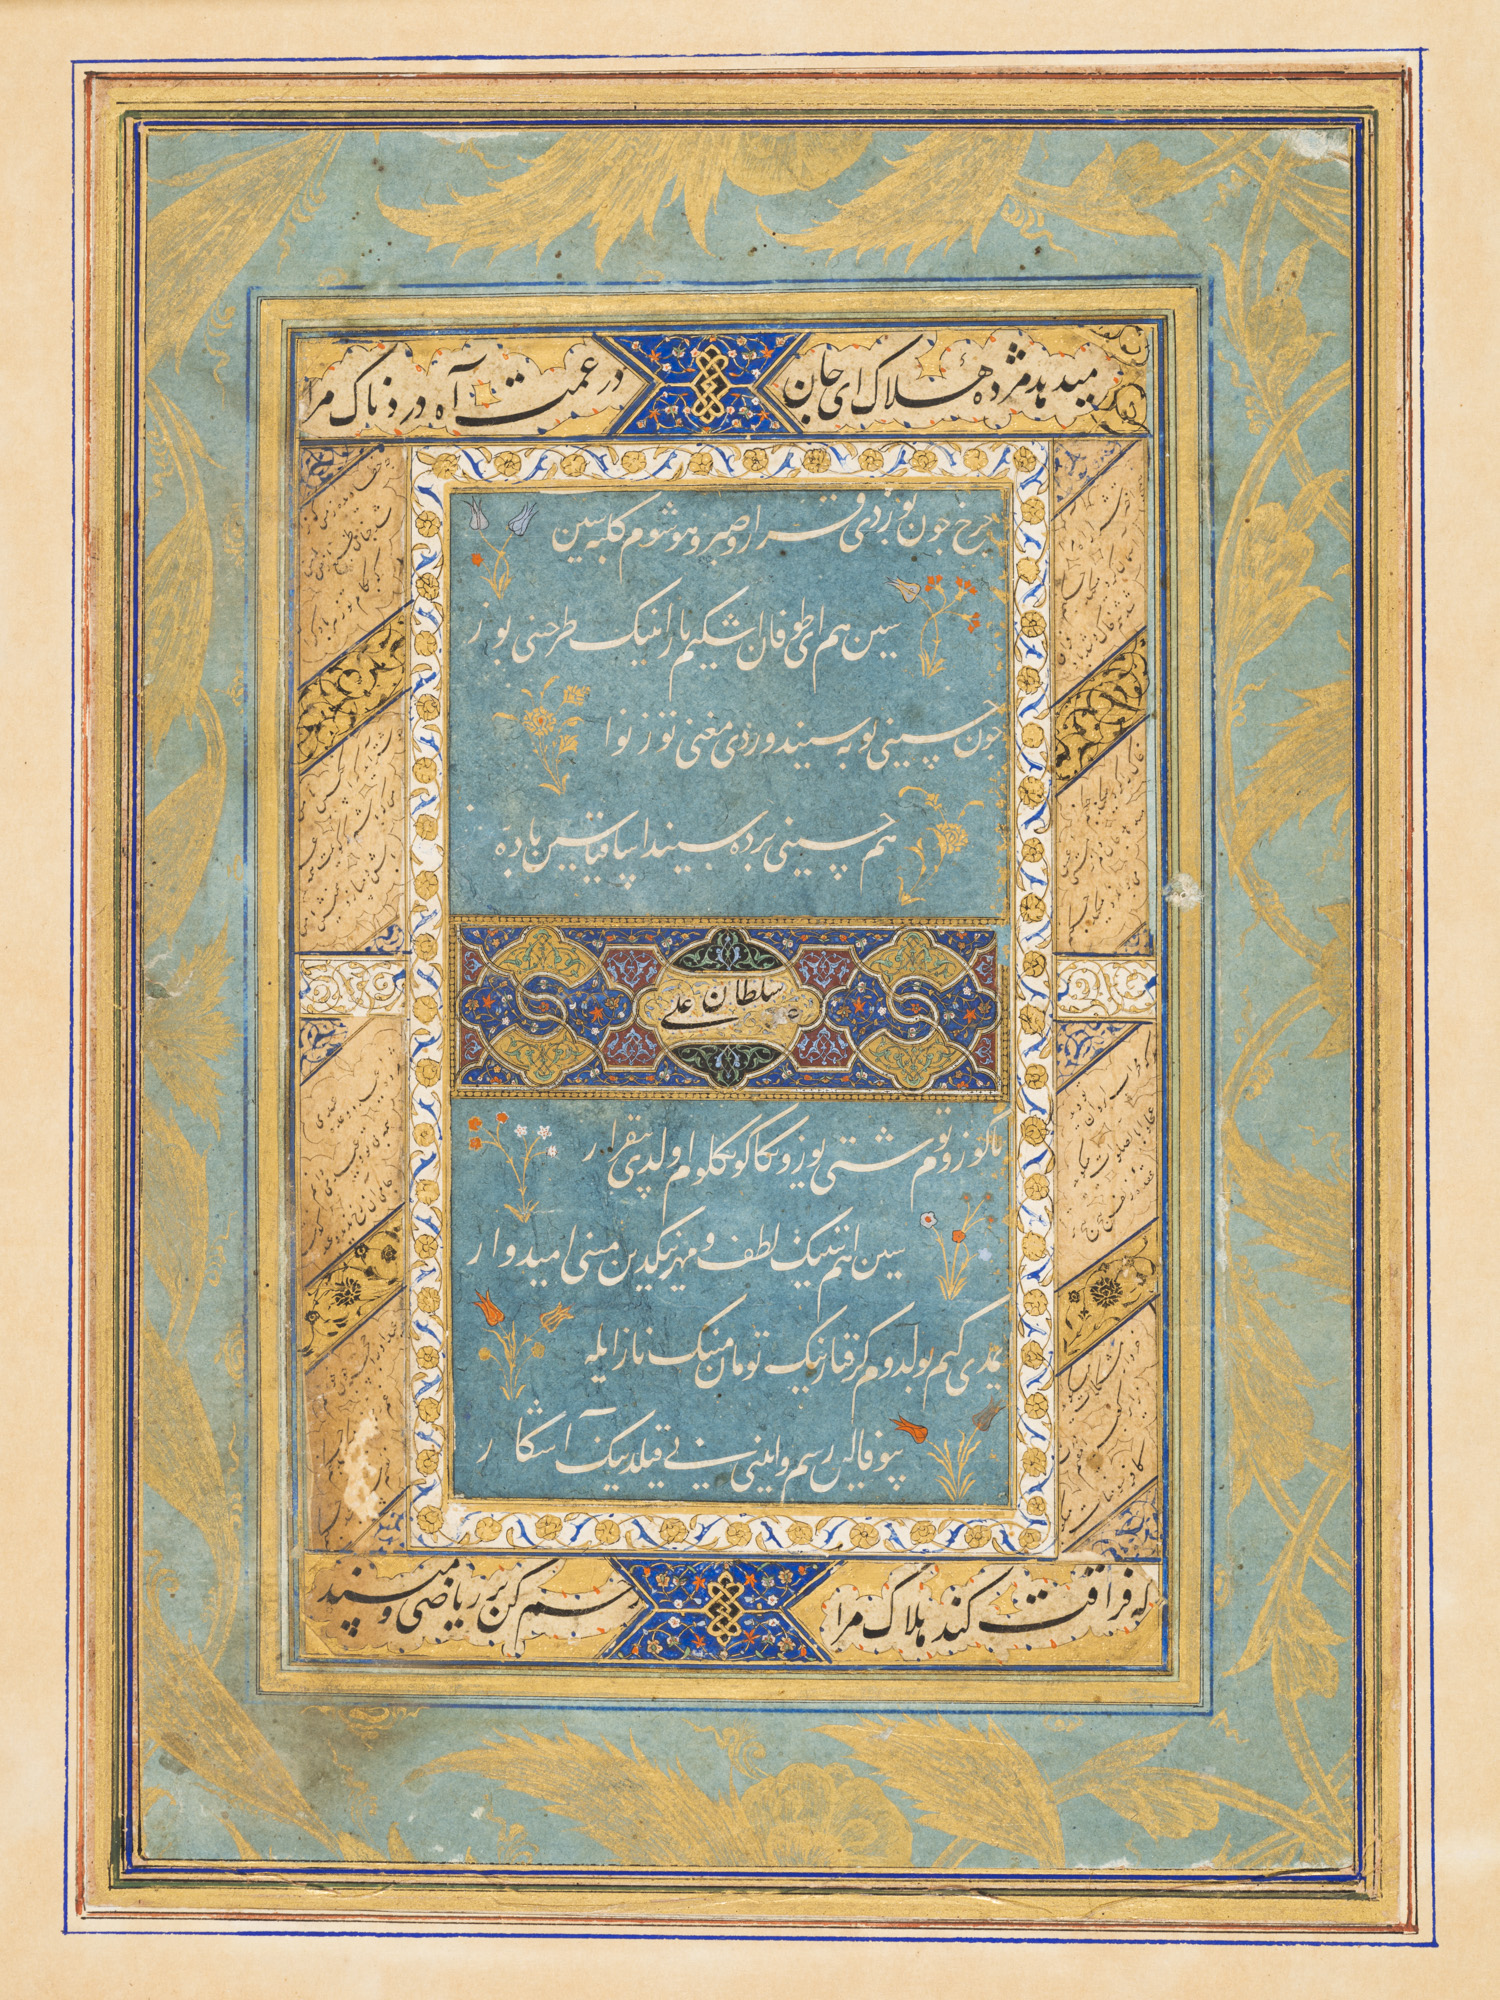 Folio는 예측할 수없는 사랑의 환경으로 인한 슬픔과 고뇌 묘사 : 술탄 후사인 미르자 바이 카라 (Sultan Husayn Mirza Bayqara)의 시가 흩어져있는 디완 (수집 된 작품)의 페이지 by Sultan Ali Mashhadi - 약 1490 (티무르 시대) - 15 5/16 in x 11 1/16 in 